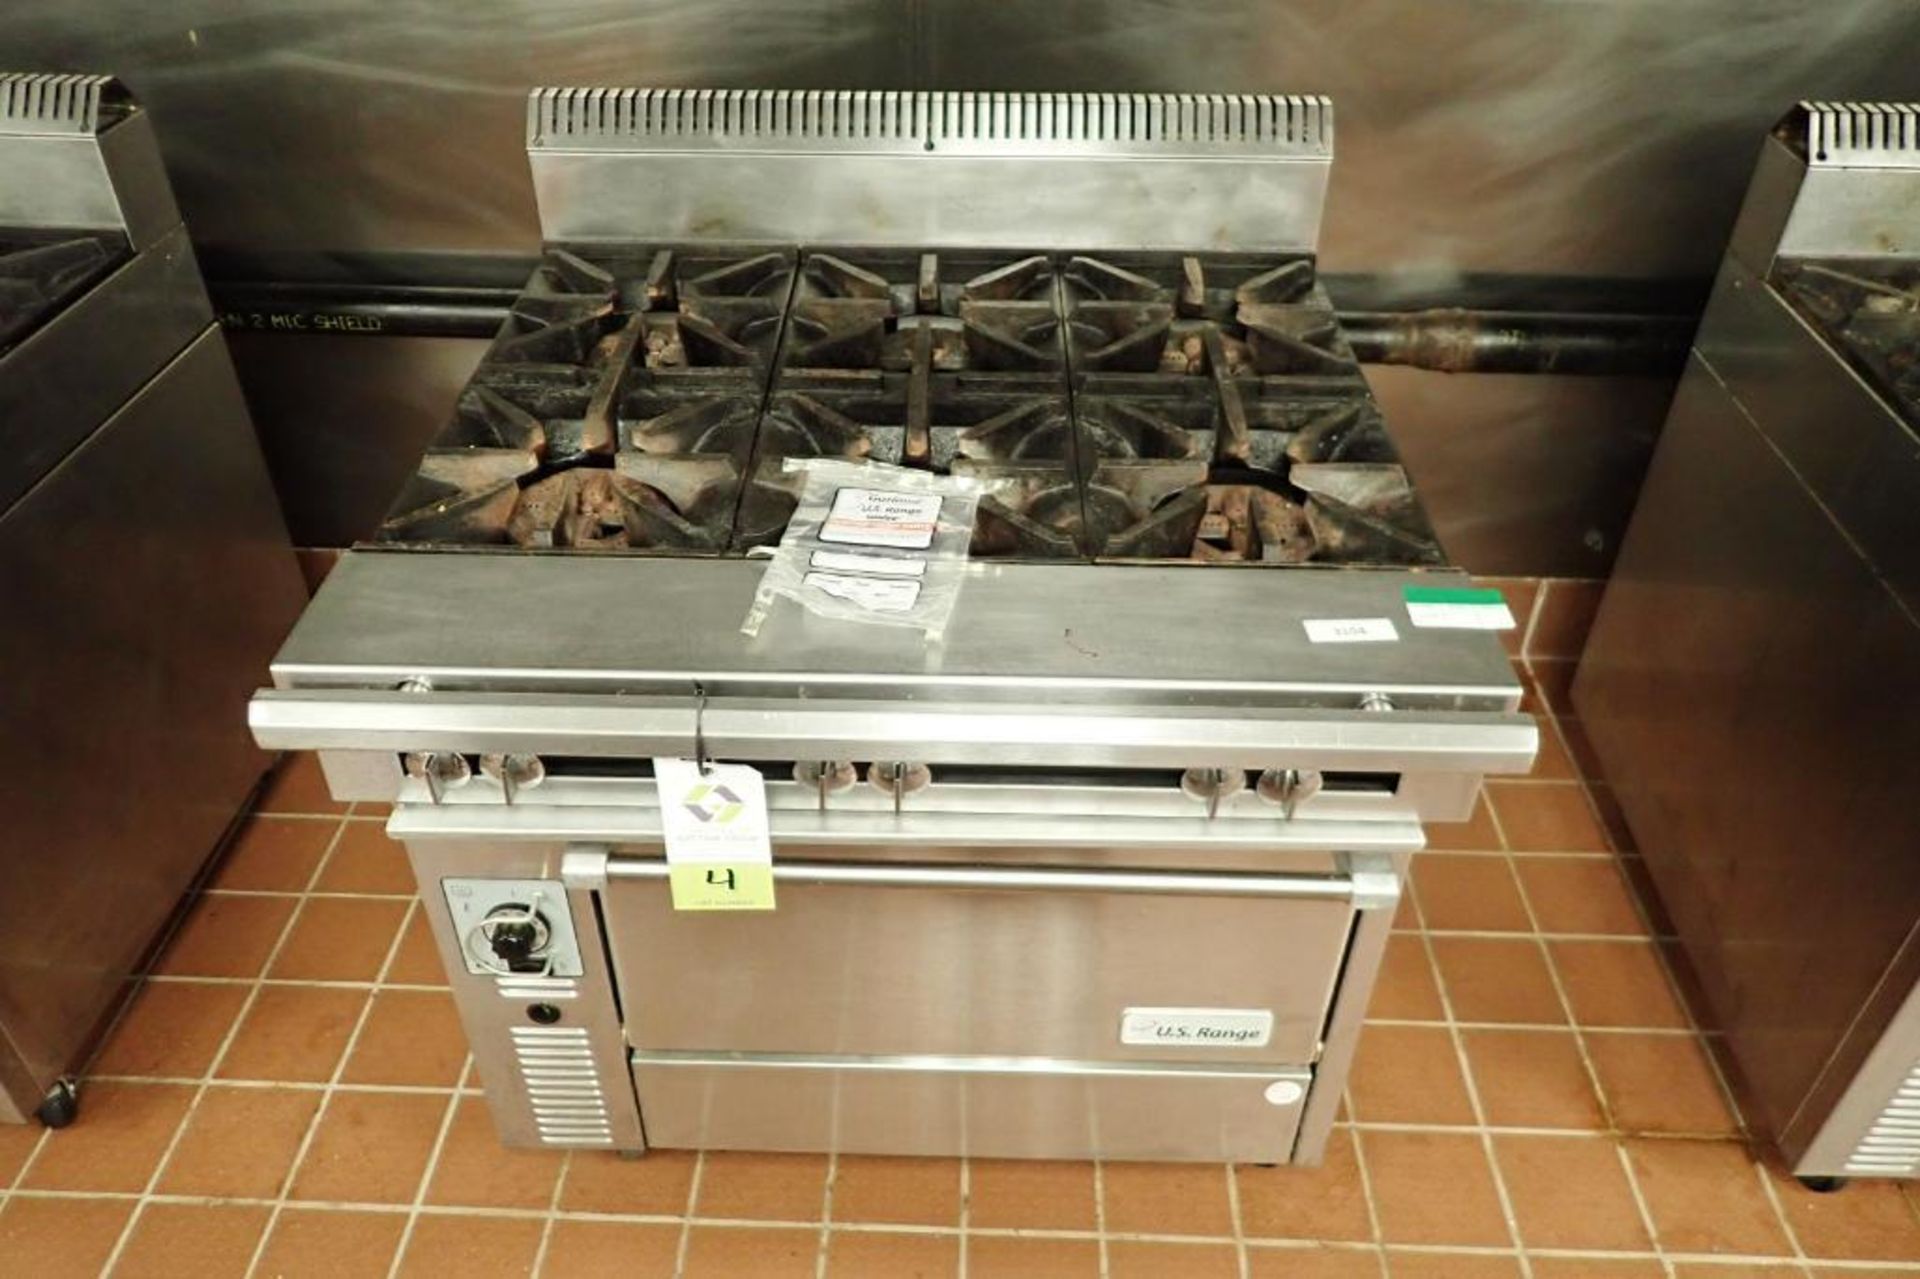 US Range six burner standard oven, Model C836-6, natural gas, 36 in. wide x 39 in. deep x 41 in. tal